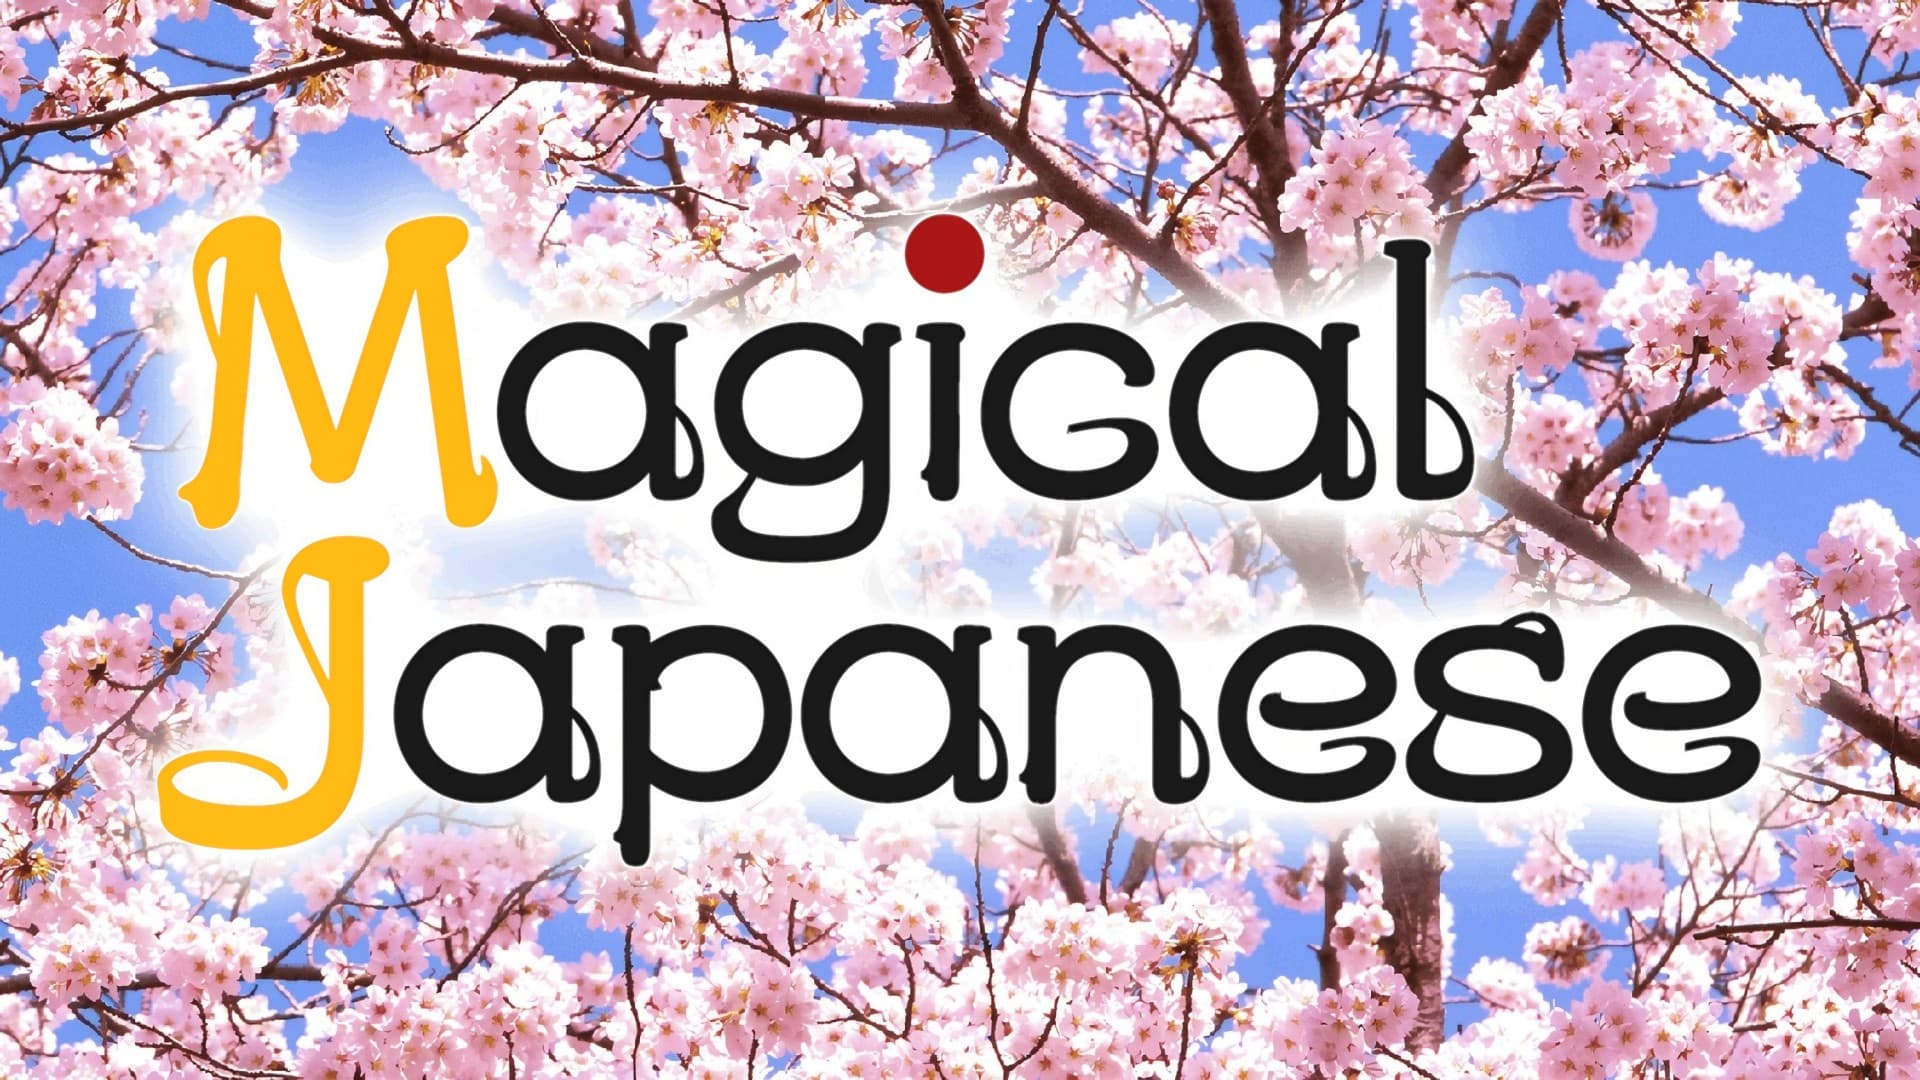 Magical Japanese - Season 4 Episode 1